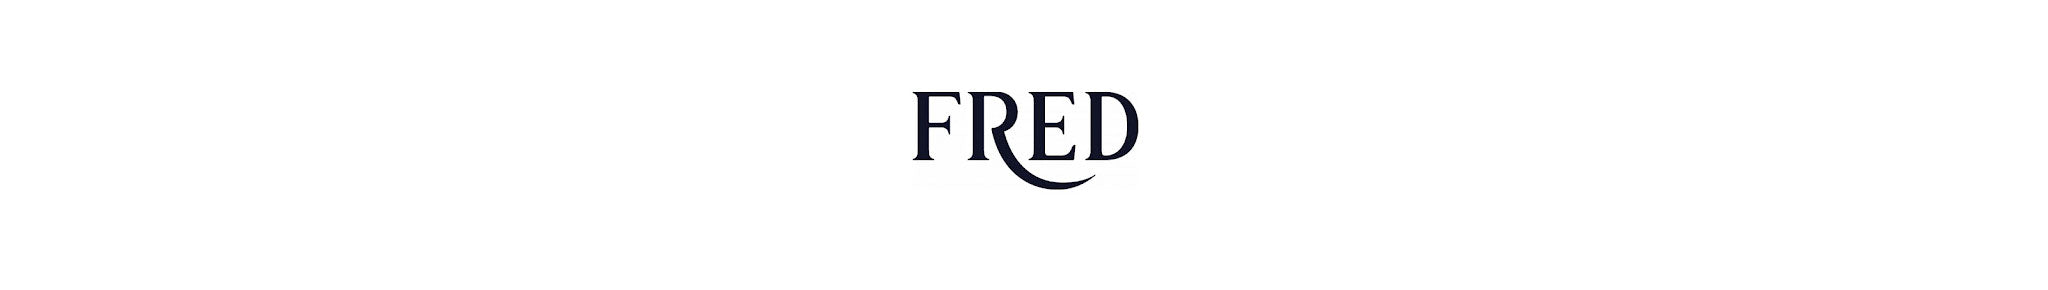 Fred Paris Display Logo Piece Rare Vintage Fred Lunettes Dealer Logo Display